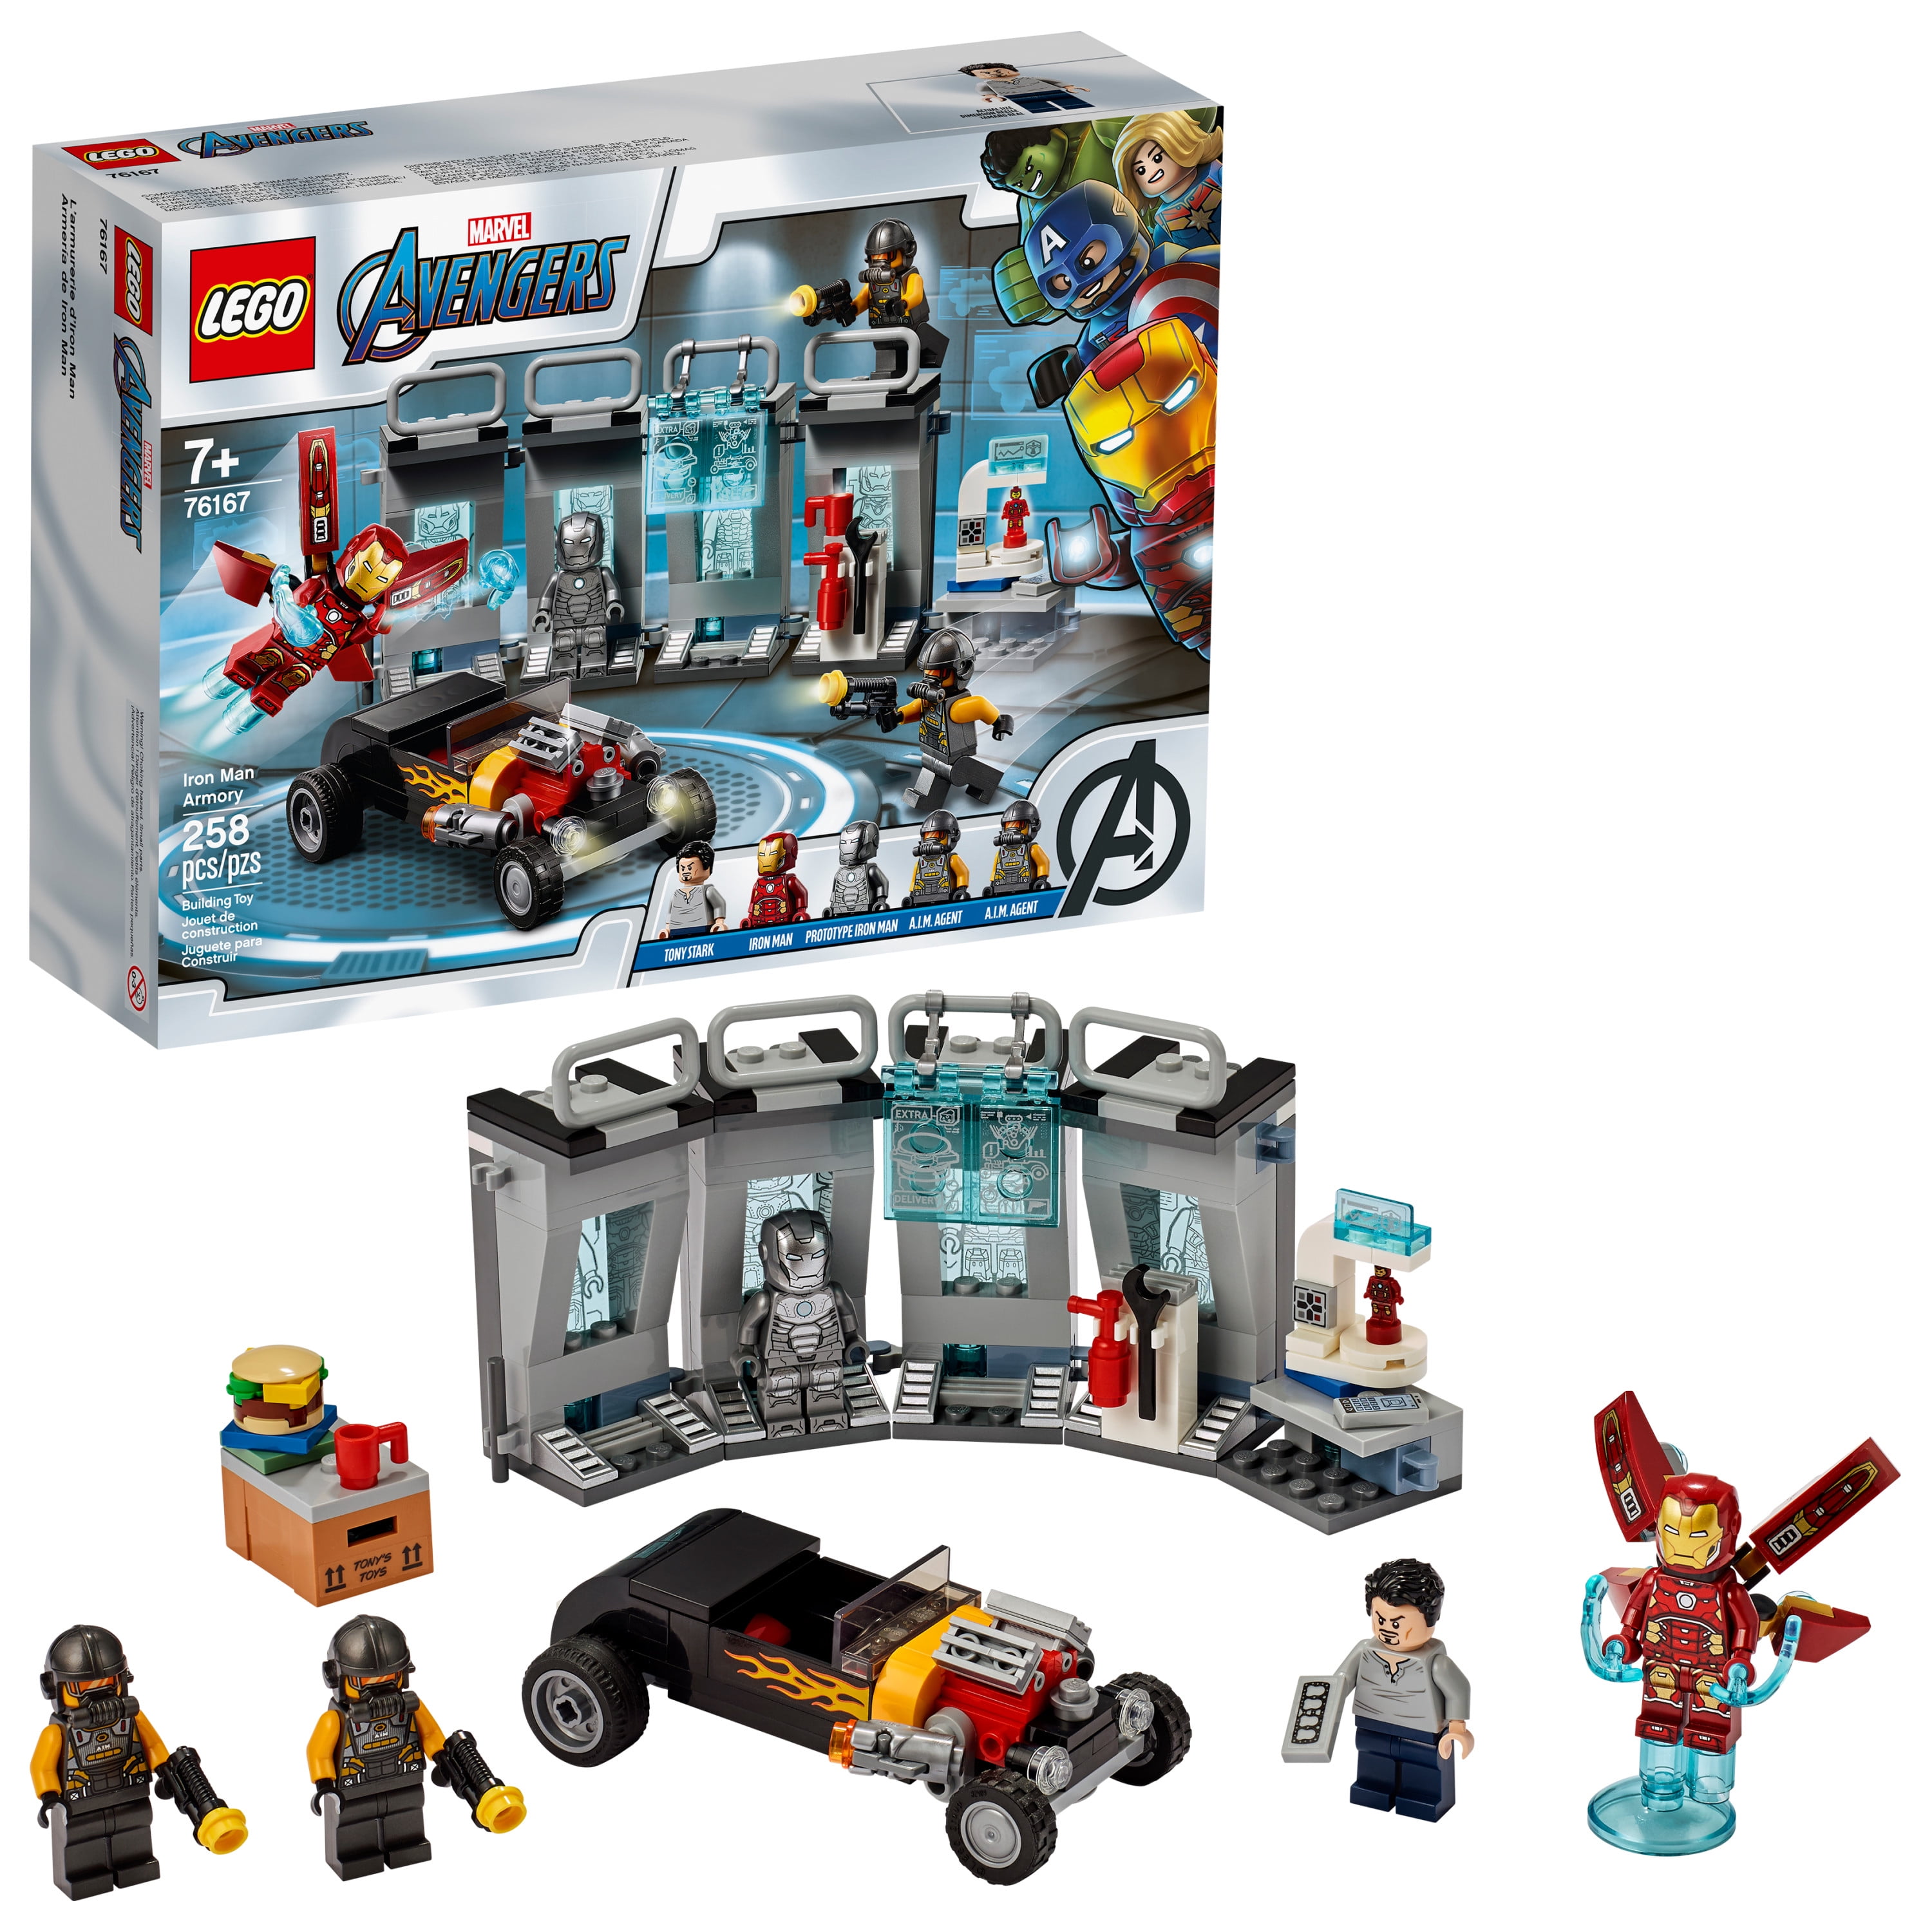 LEGO Marvel Avengers Iron Man Minifigure New from 76167 jet pack 